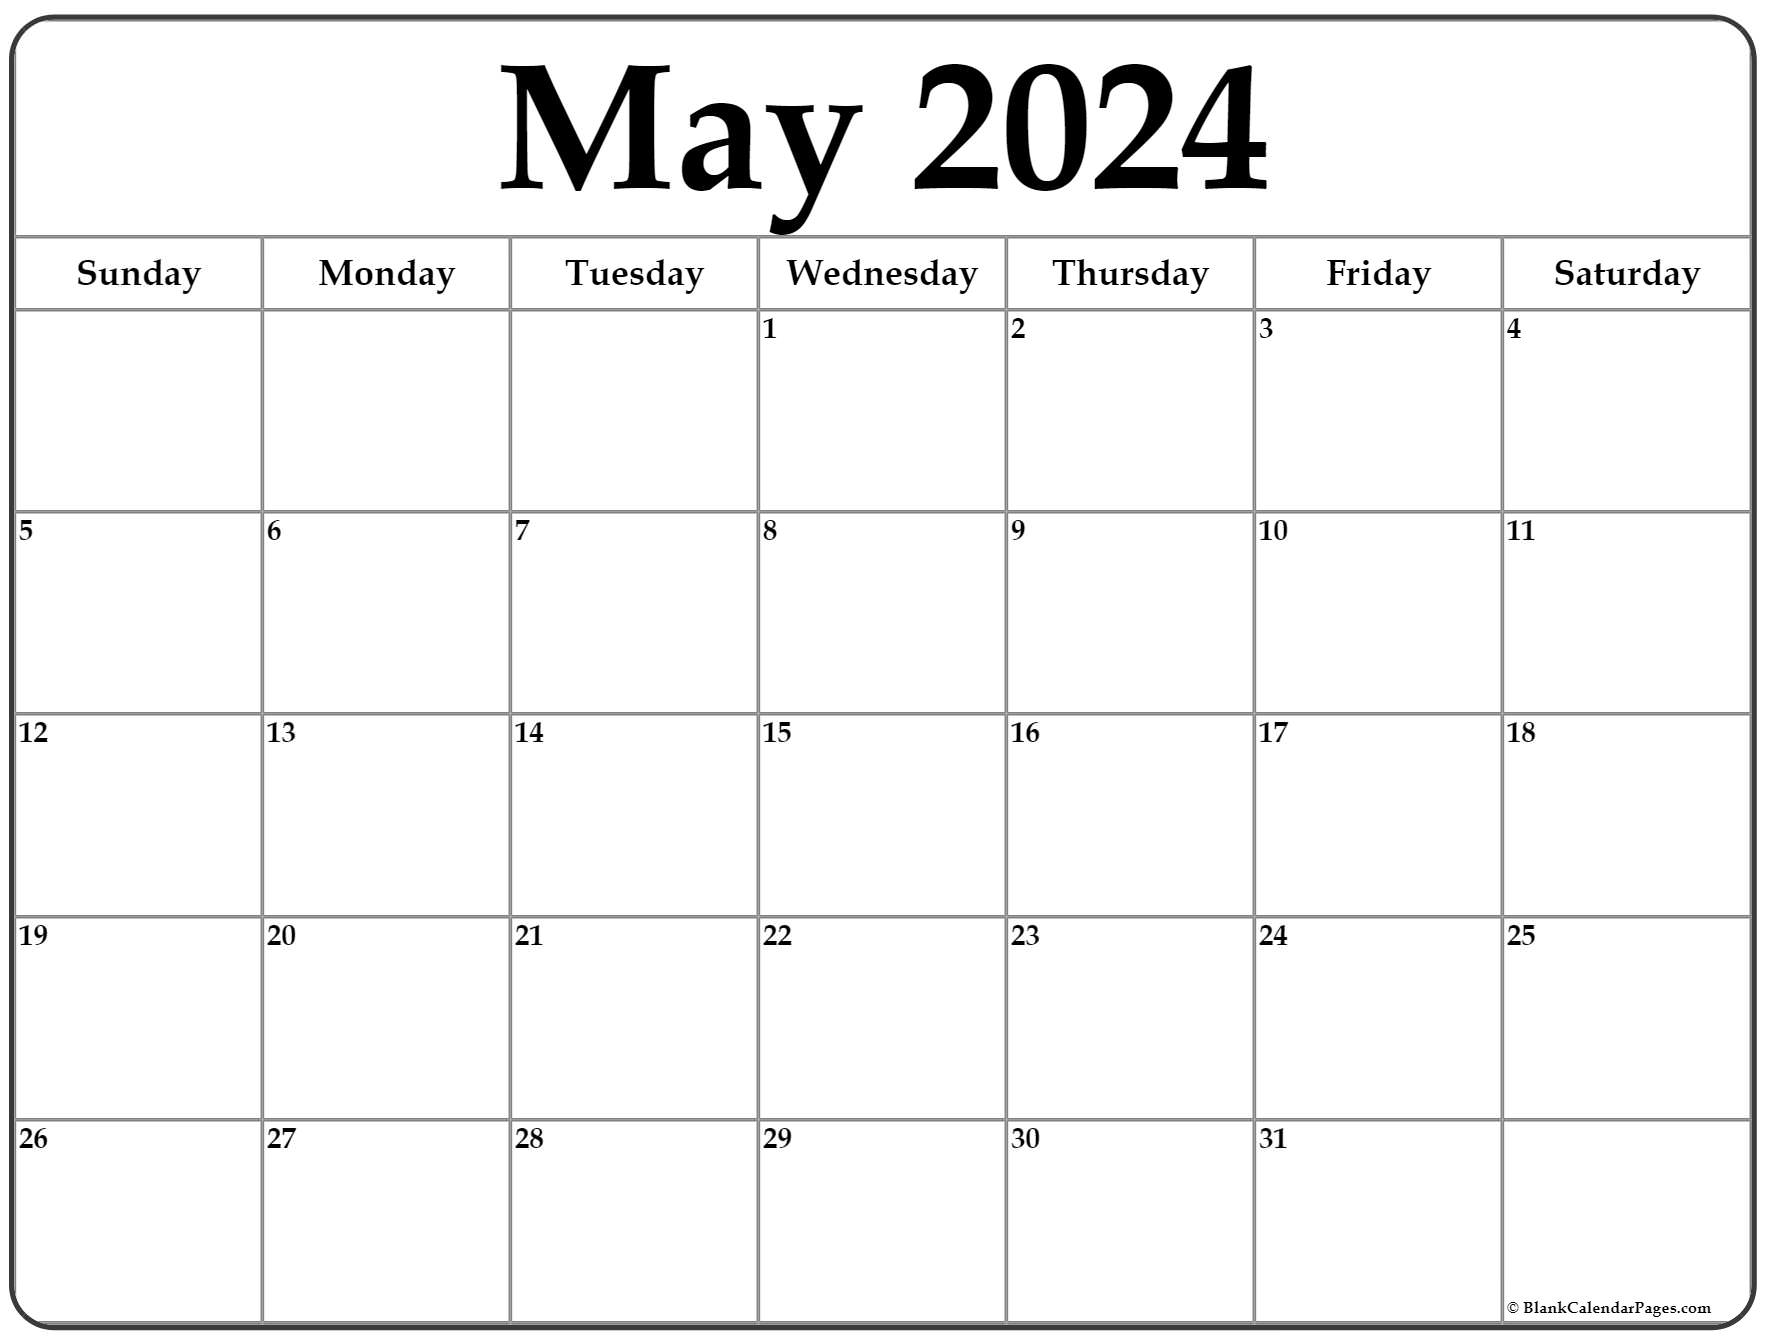 Print May 2022 Calendar May 2022 Calendar | Free Printable Calendar Templates